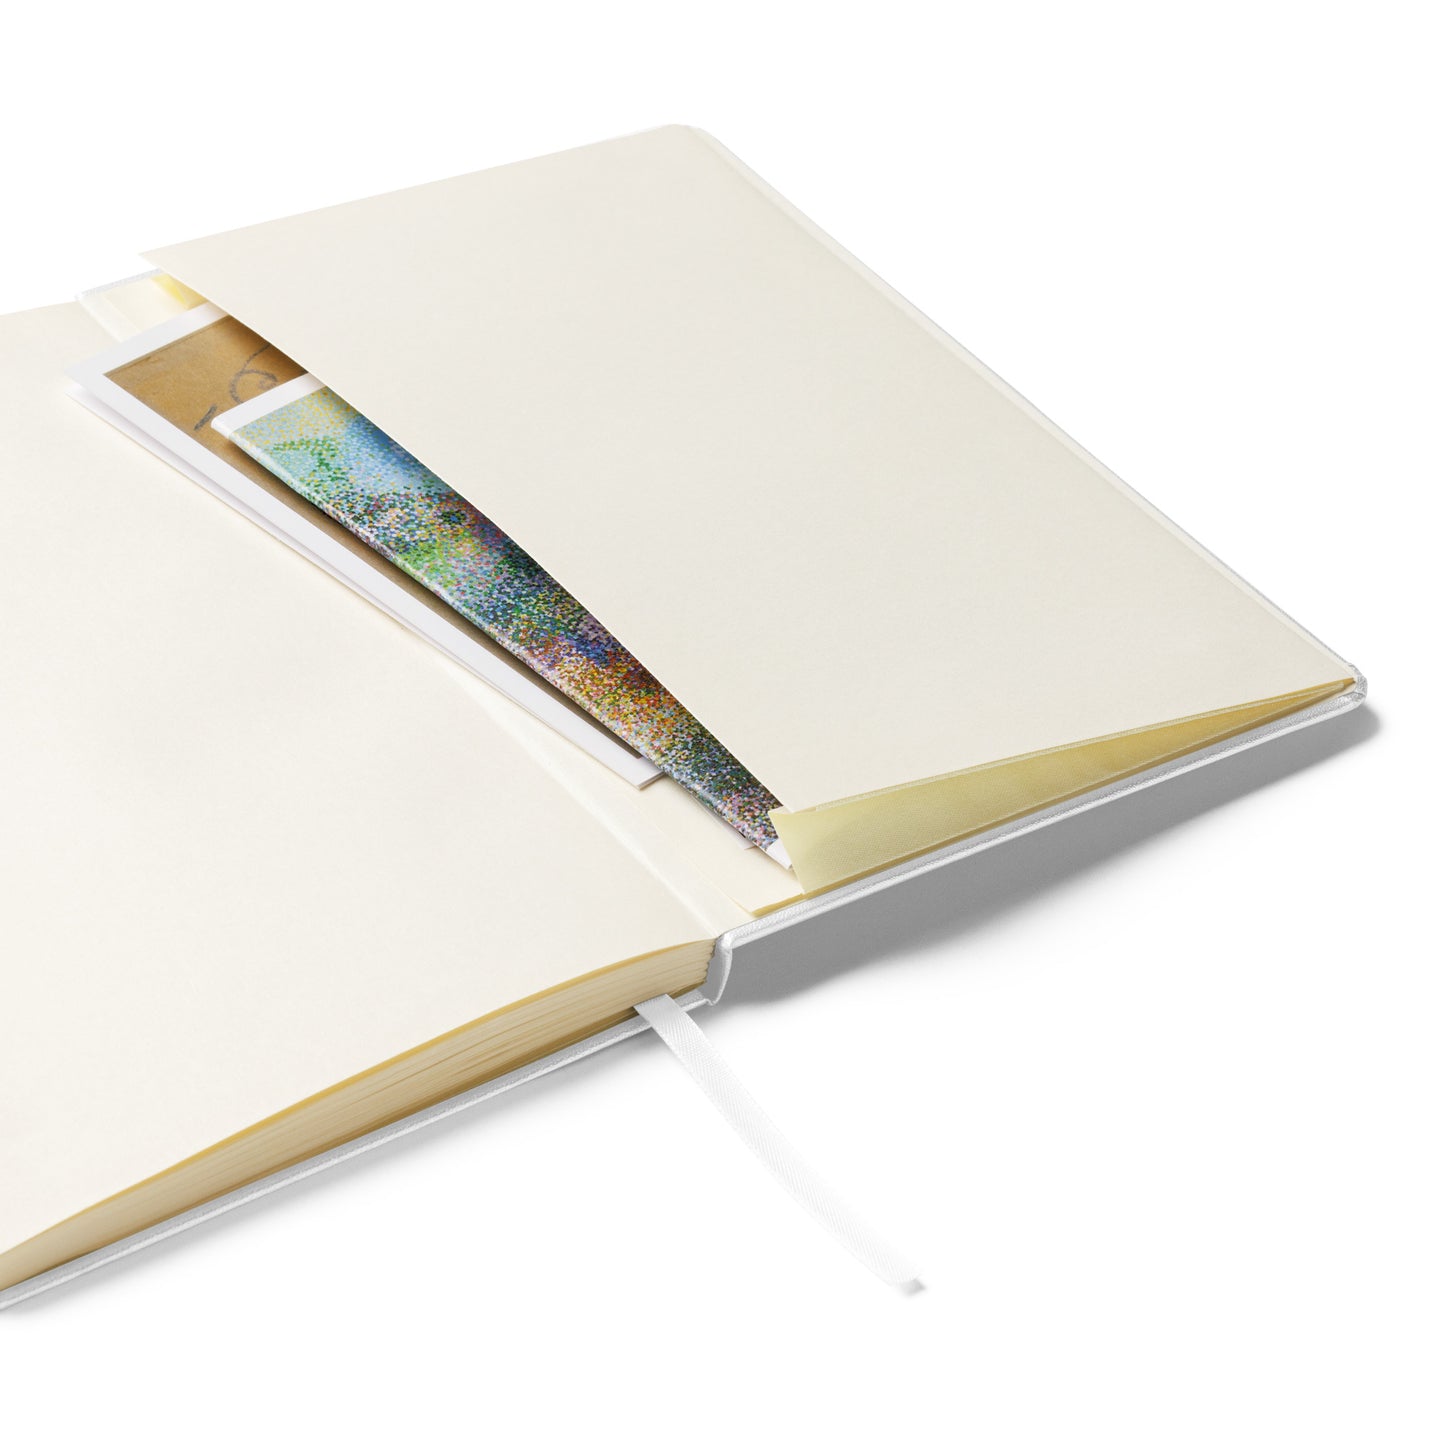 Peace, Love & Catnip - Hardcover bound notebook